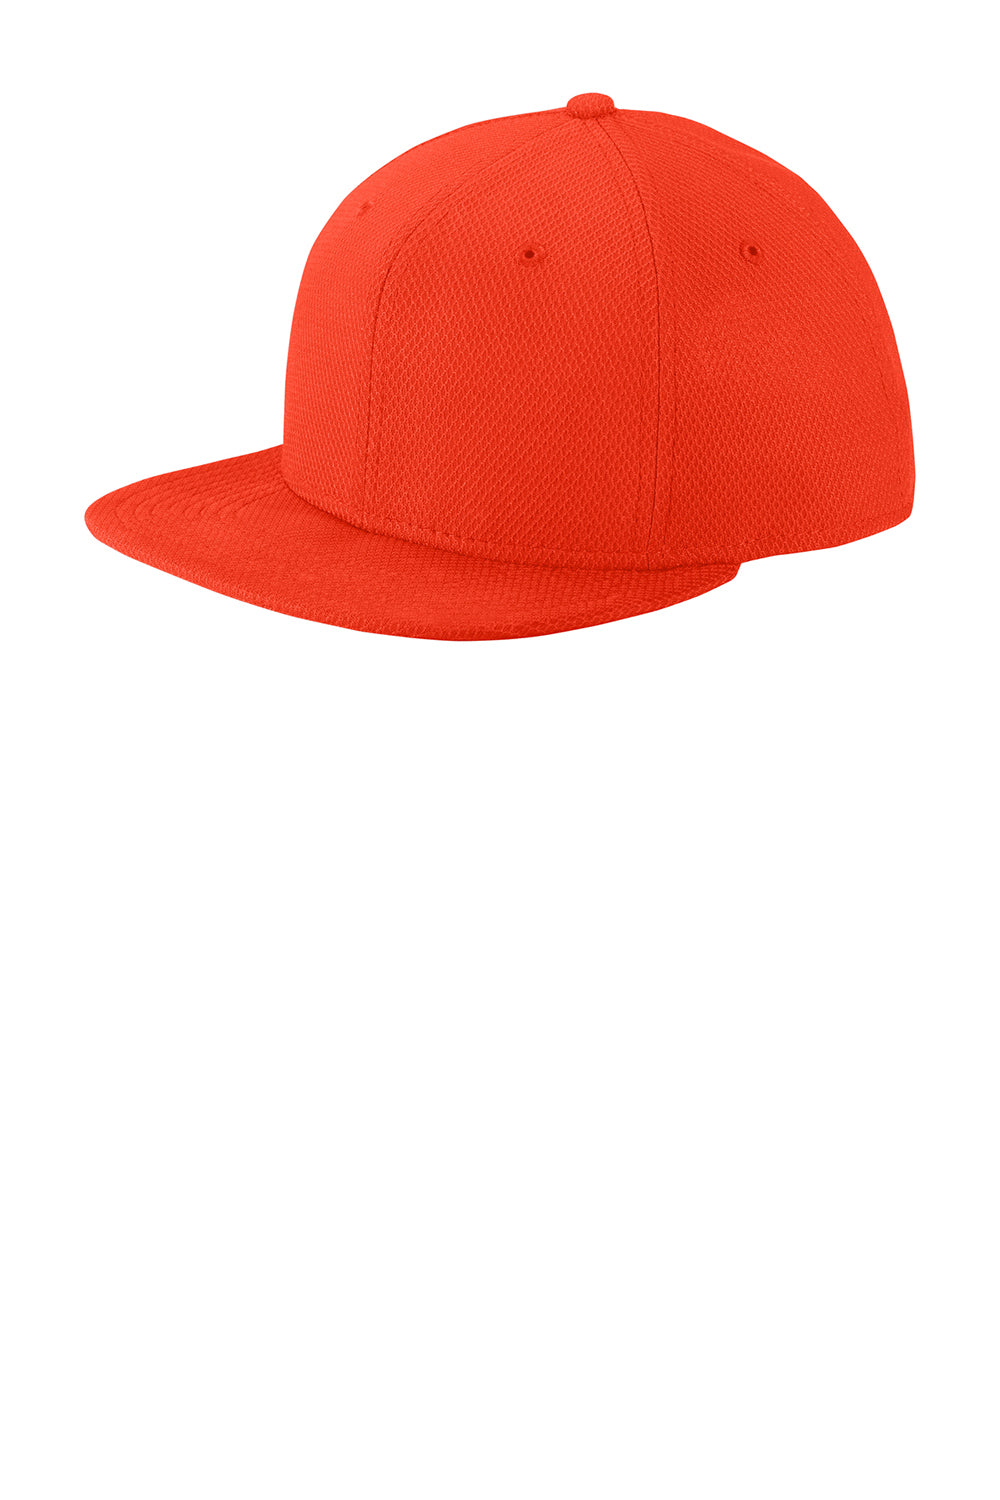 New Era NE404 Mens Moisture Wicking Adjustable Hat Orange Front